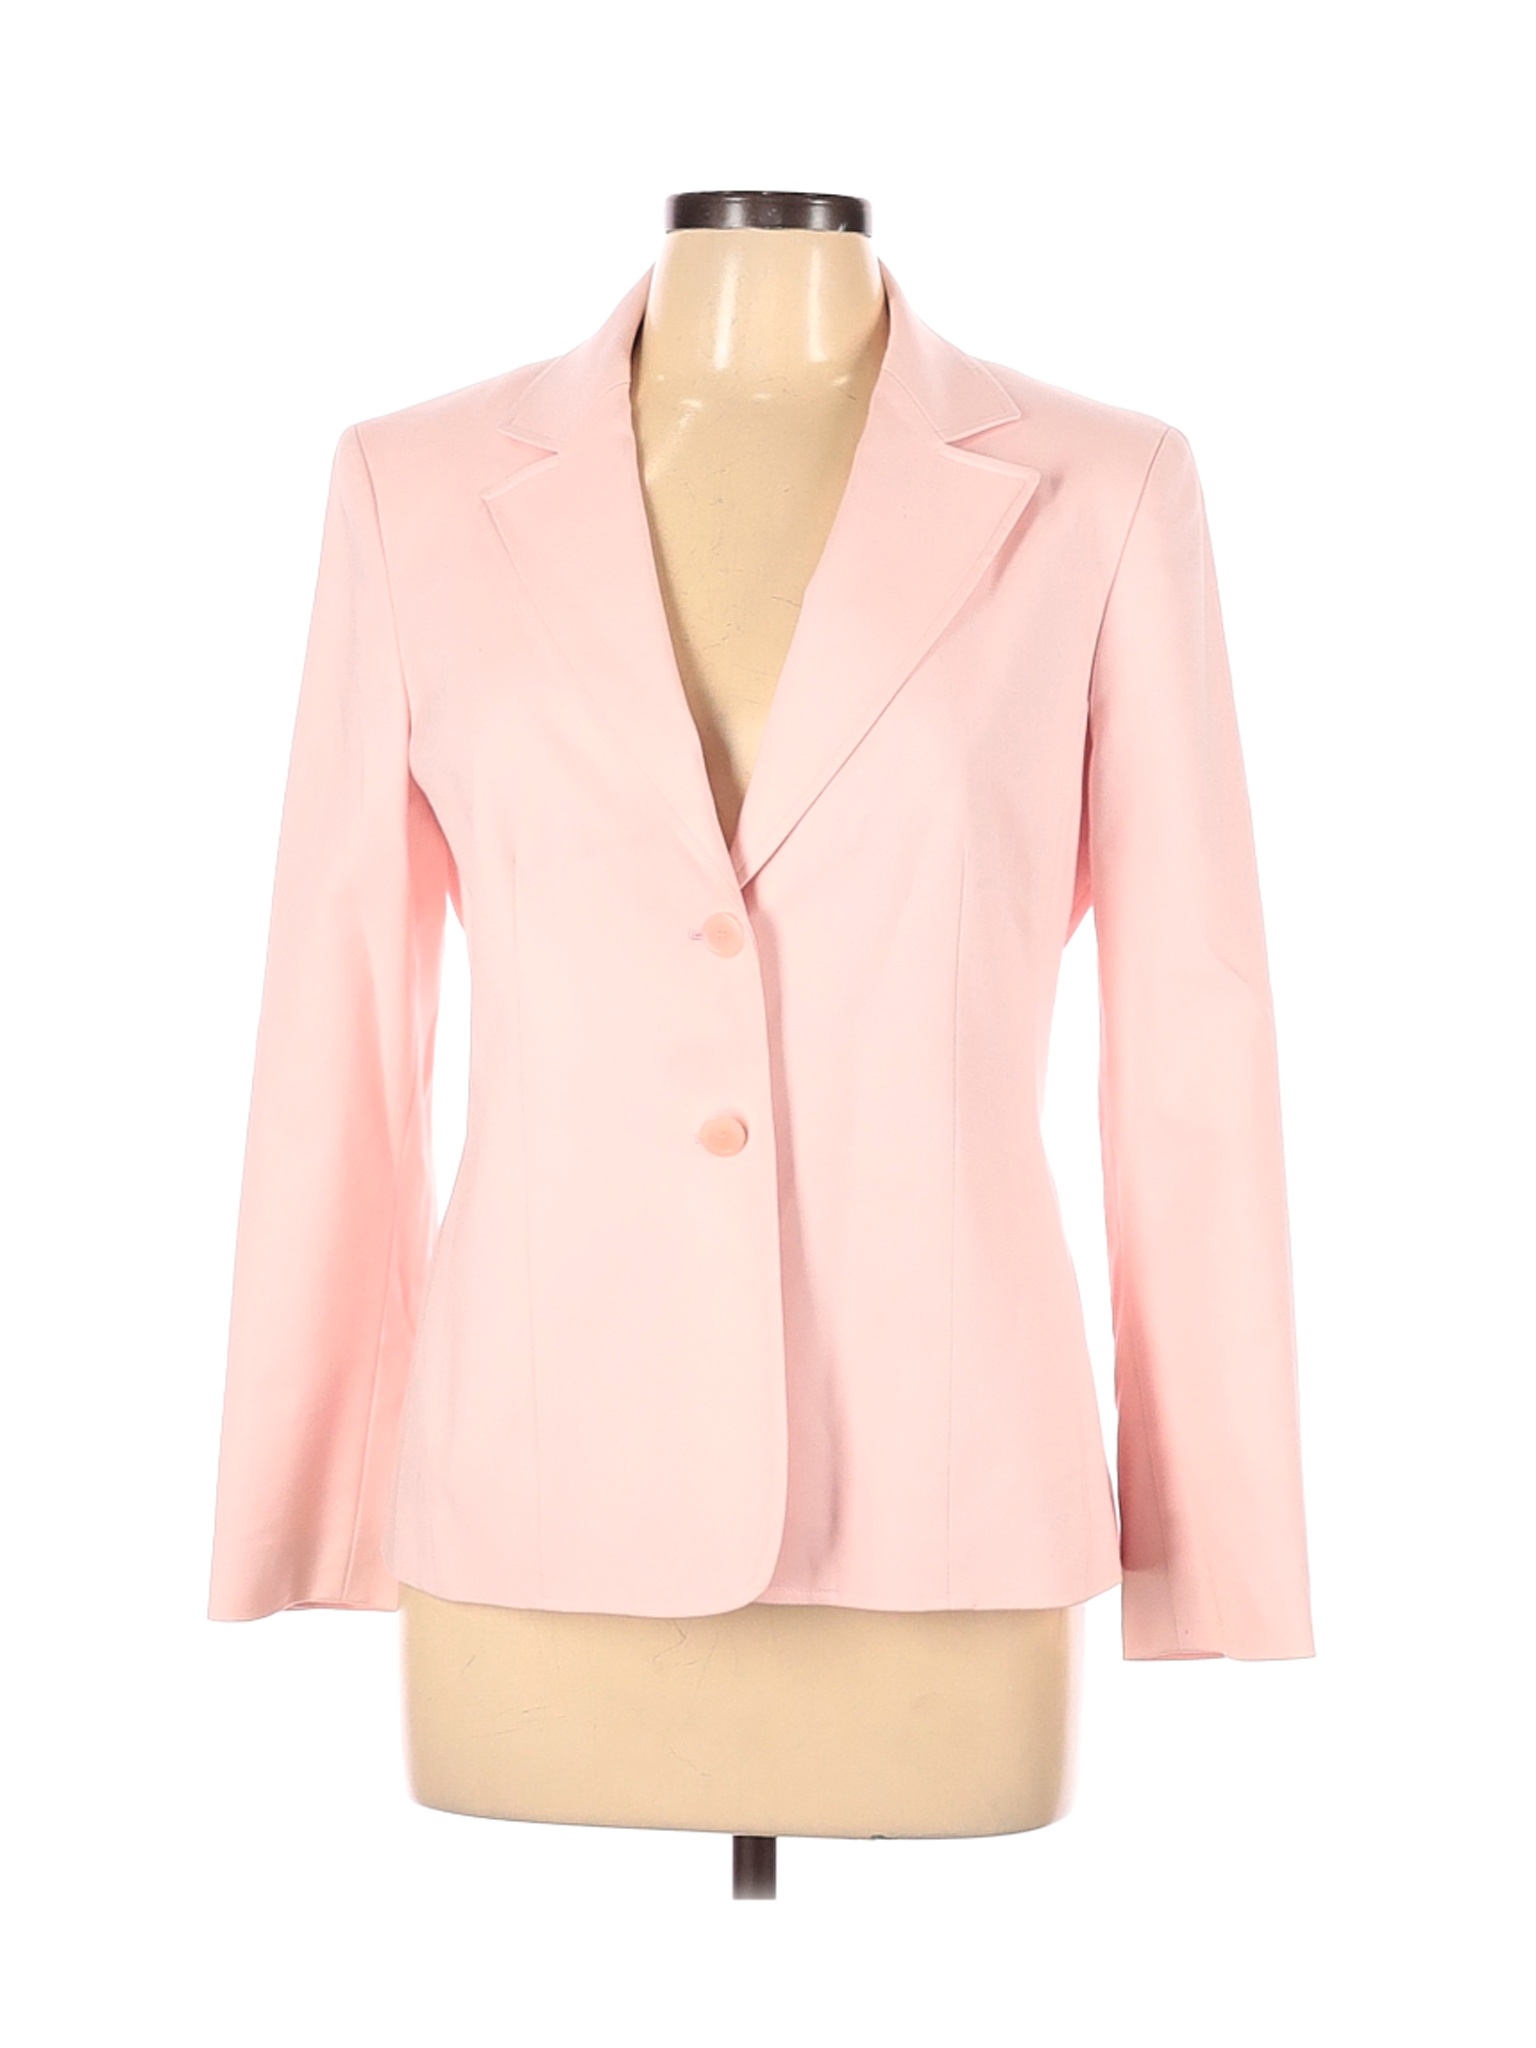 Talbots Women Pink Blazer 12 Petites | eBay